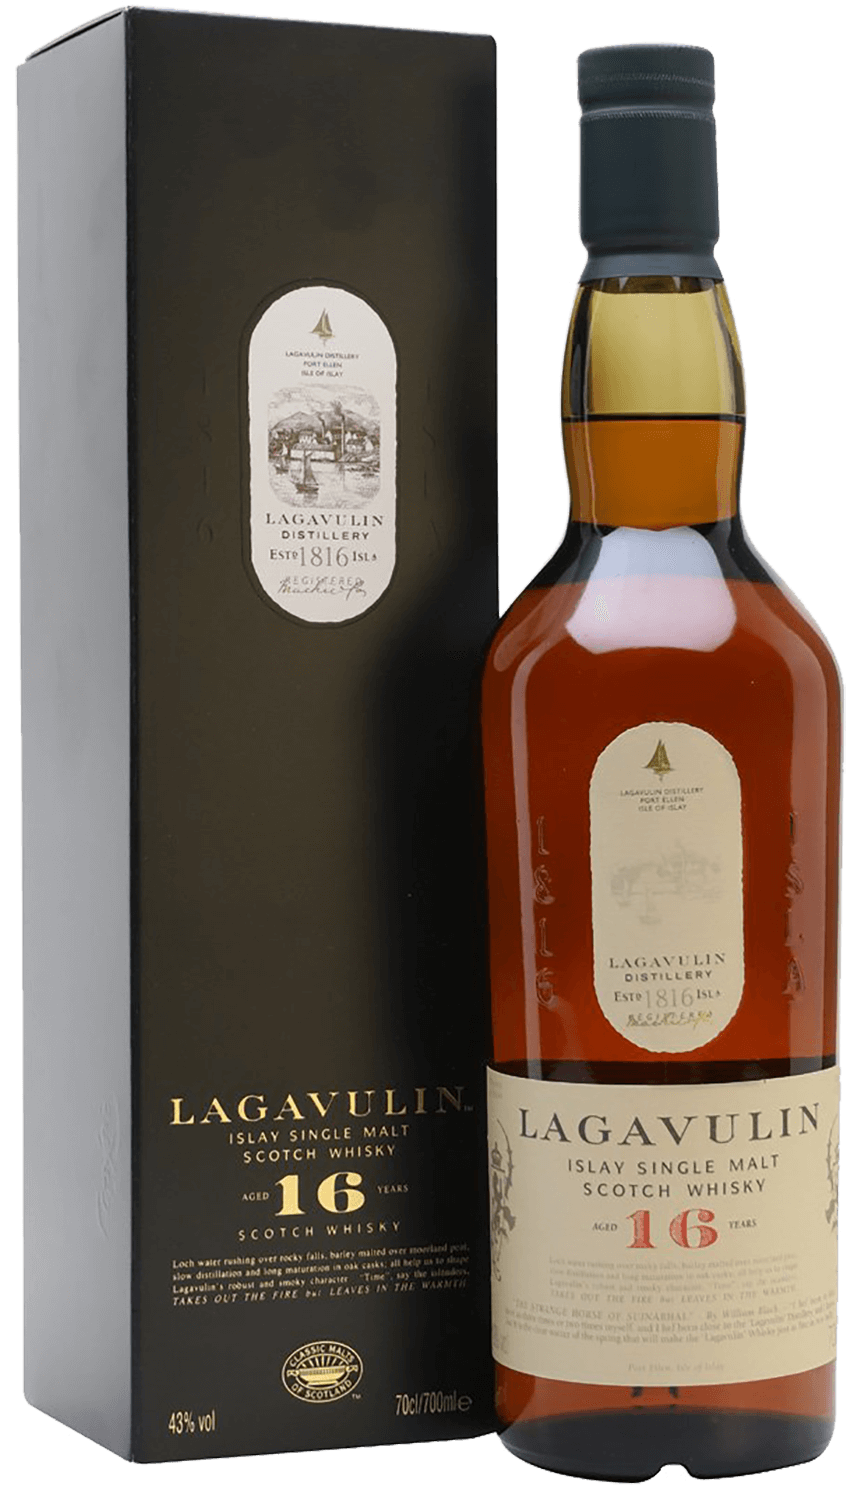 Lagavulin Islay single malt scotch whisky 16 Years Old (gift box) glenfarclas 21 years old single malt scotch whisky gift box